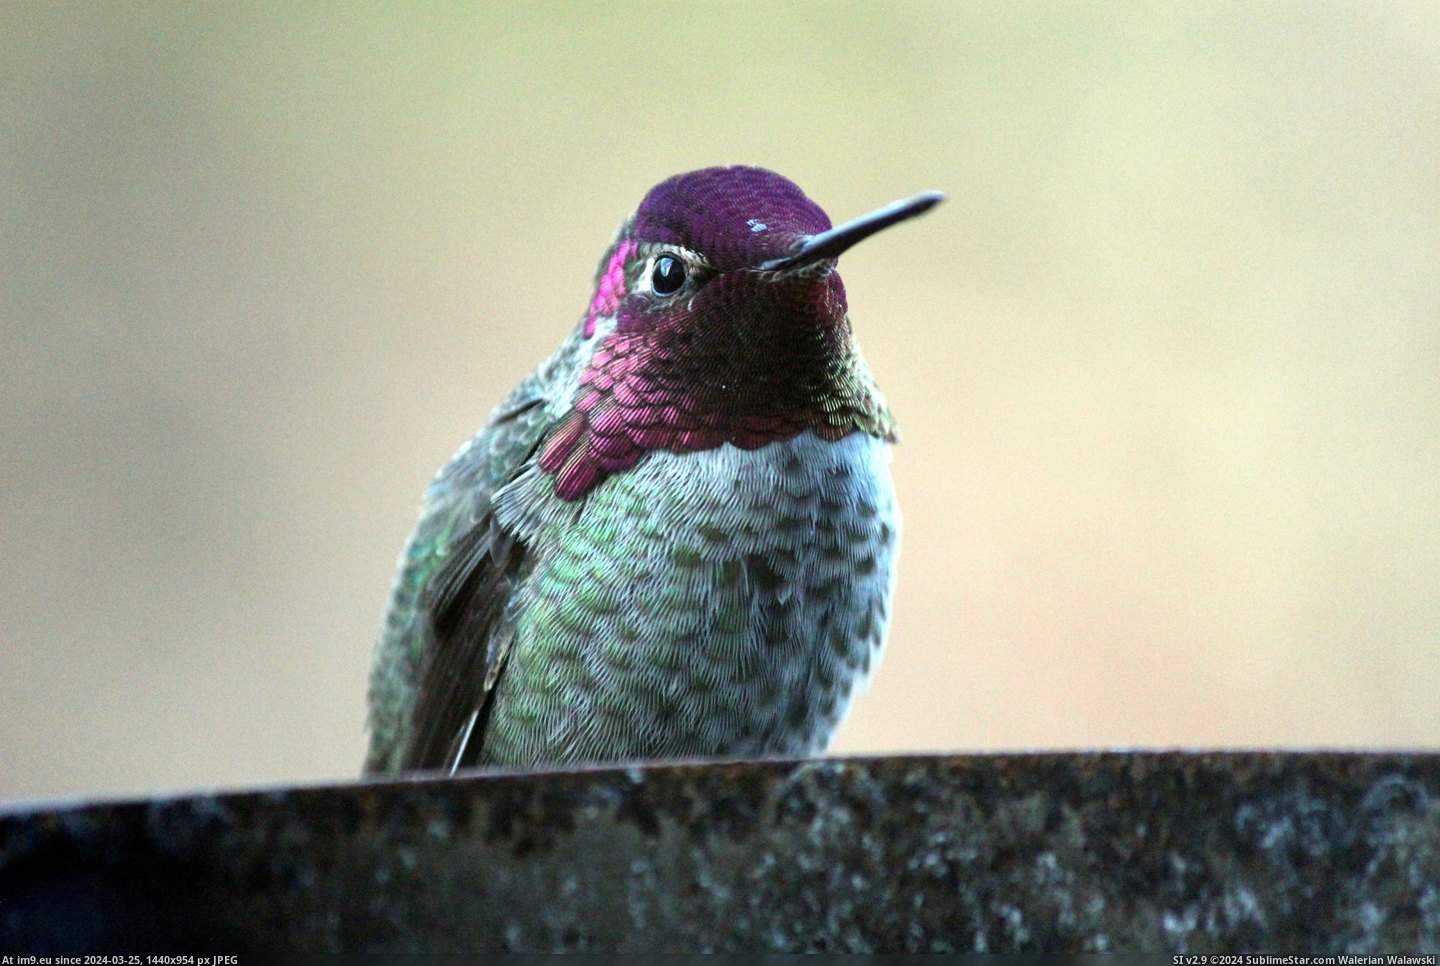 #Was #Morning #Showing #Changed #Angle #Hummingbird #Iridescent #Off #Head #Hood [Pics] A hummingbird showing off his iridescent hood this morning. The only thing that changed was the angle of his head. 7 Pic. (Obraz z album My r/PICS favs))